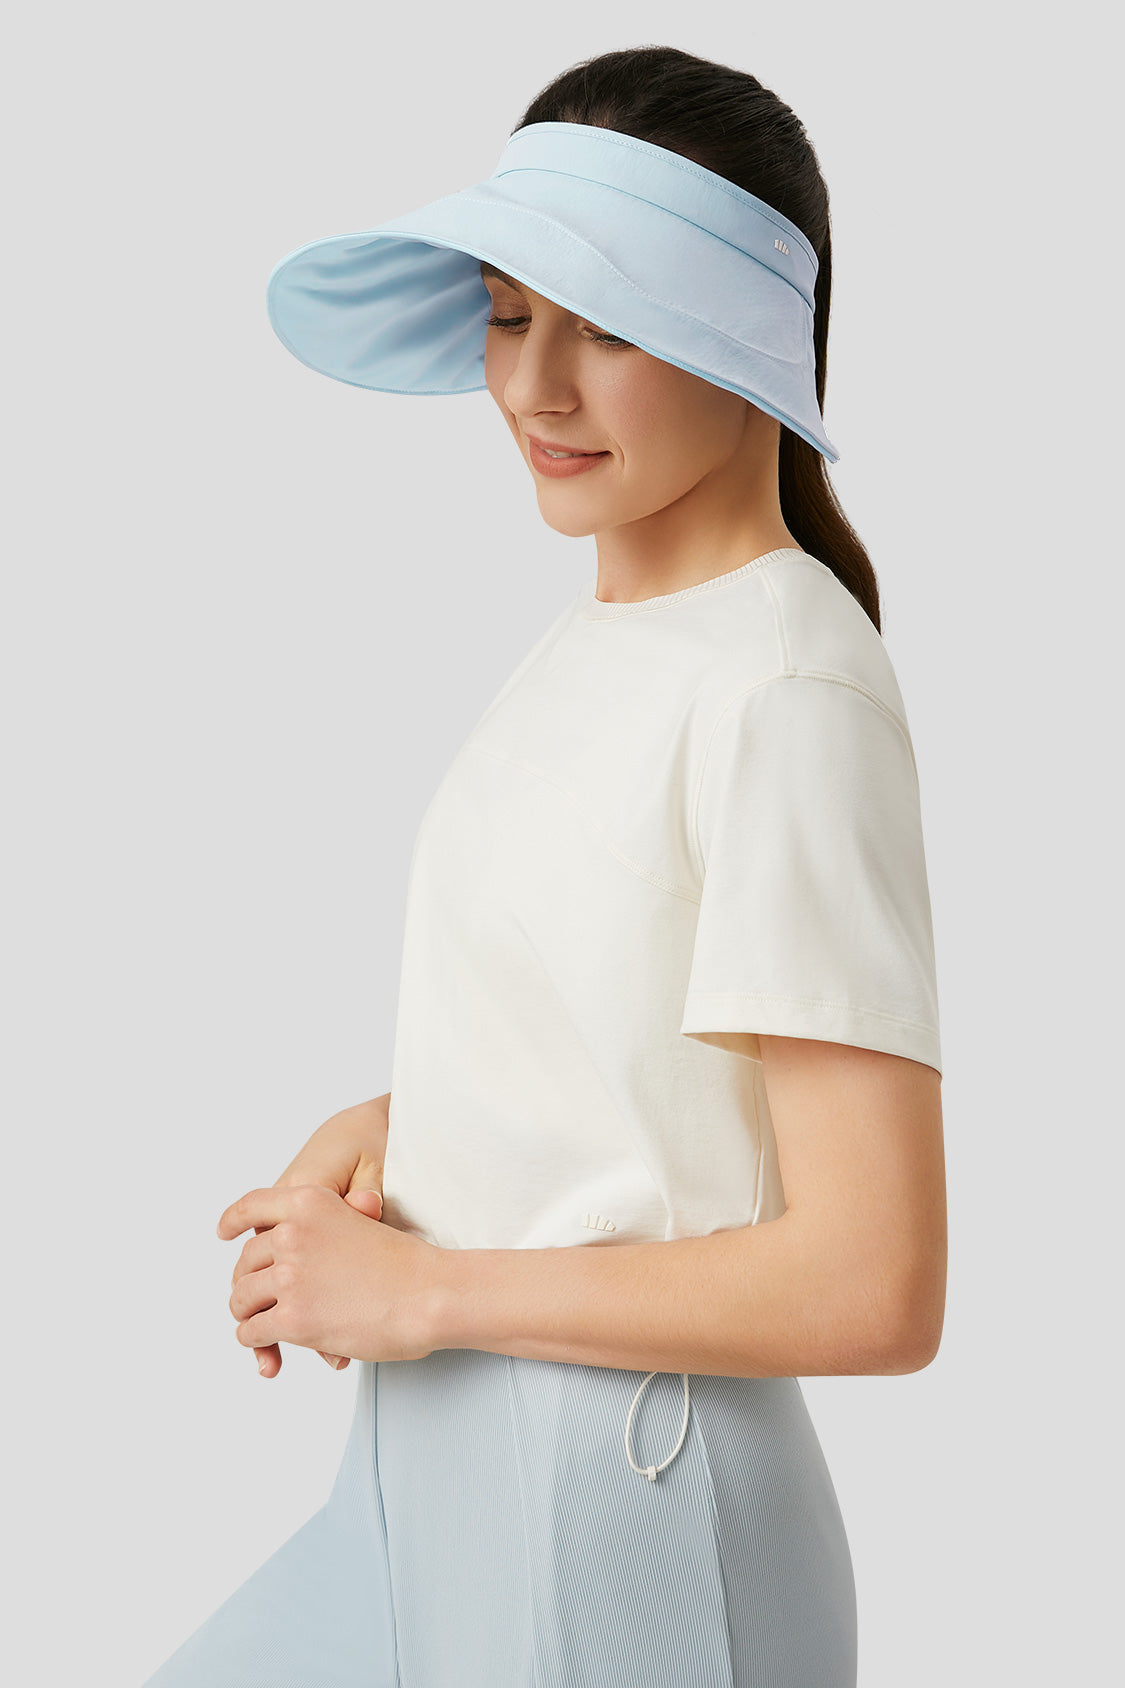 Sun Hat for Women, Beneunder UPF50+ Packable Wide Brim UV Protection Sun Visor Hat Creamy Lilac / One Size - Adjustable